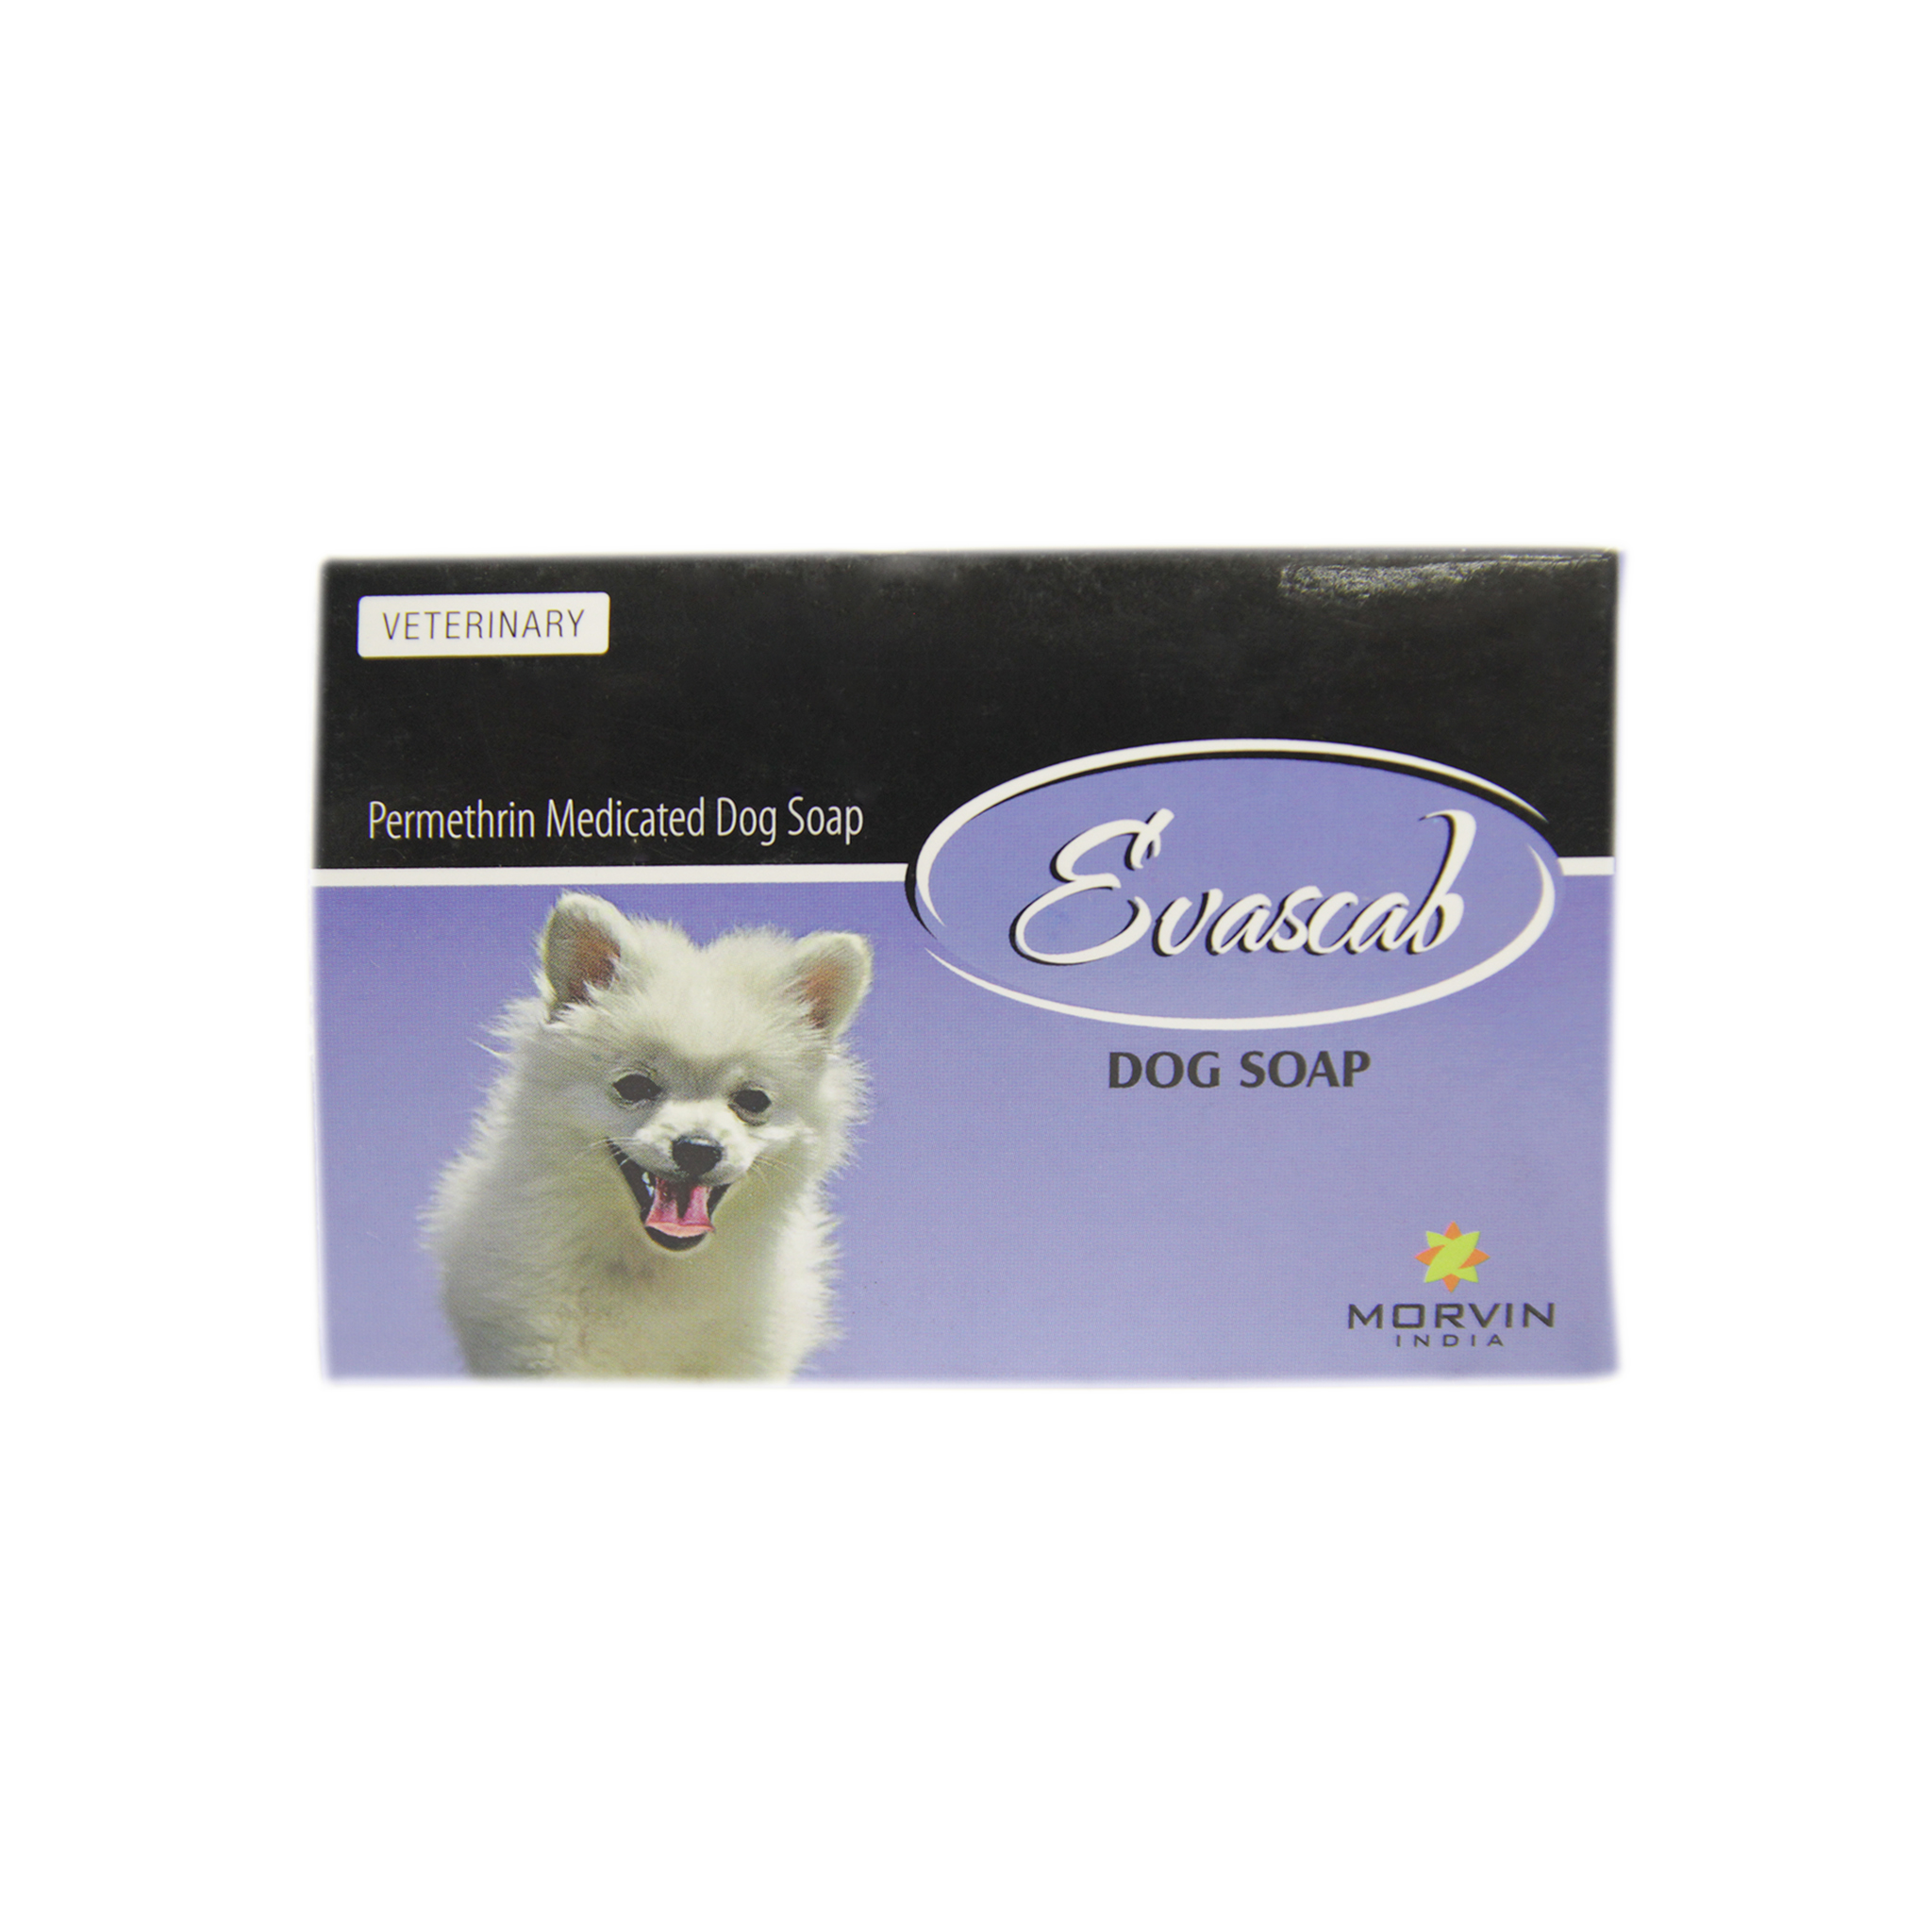 EVASCAB DOG SOAP – Jollys Pharmacy 